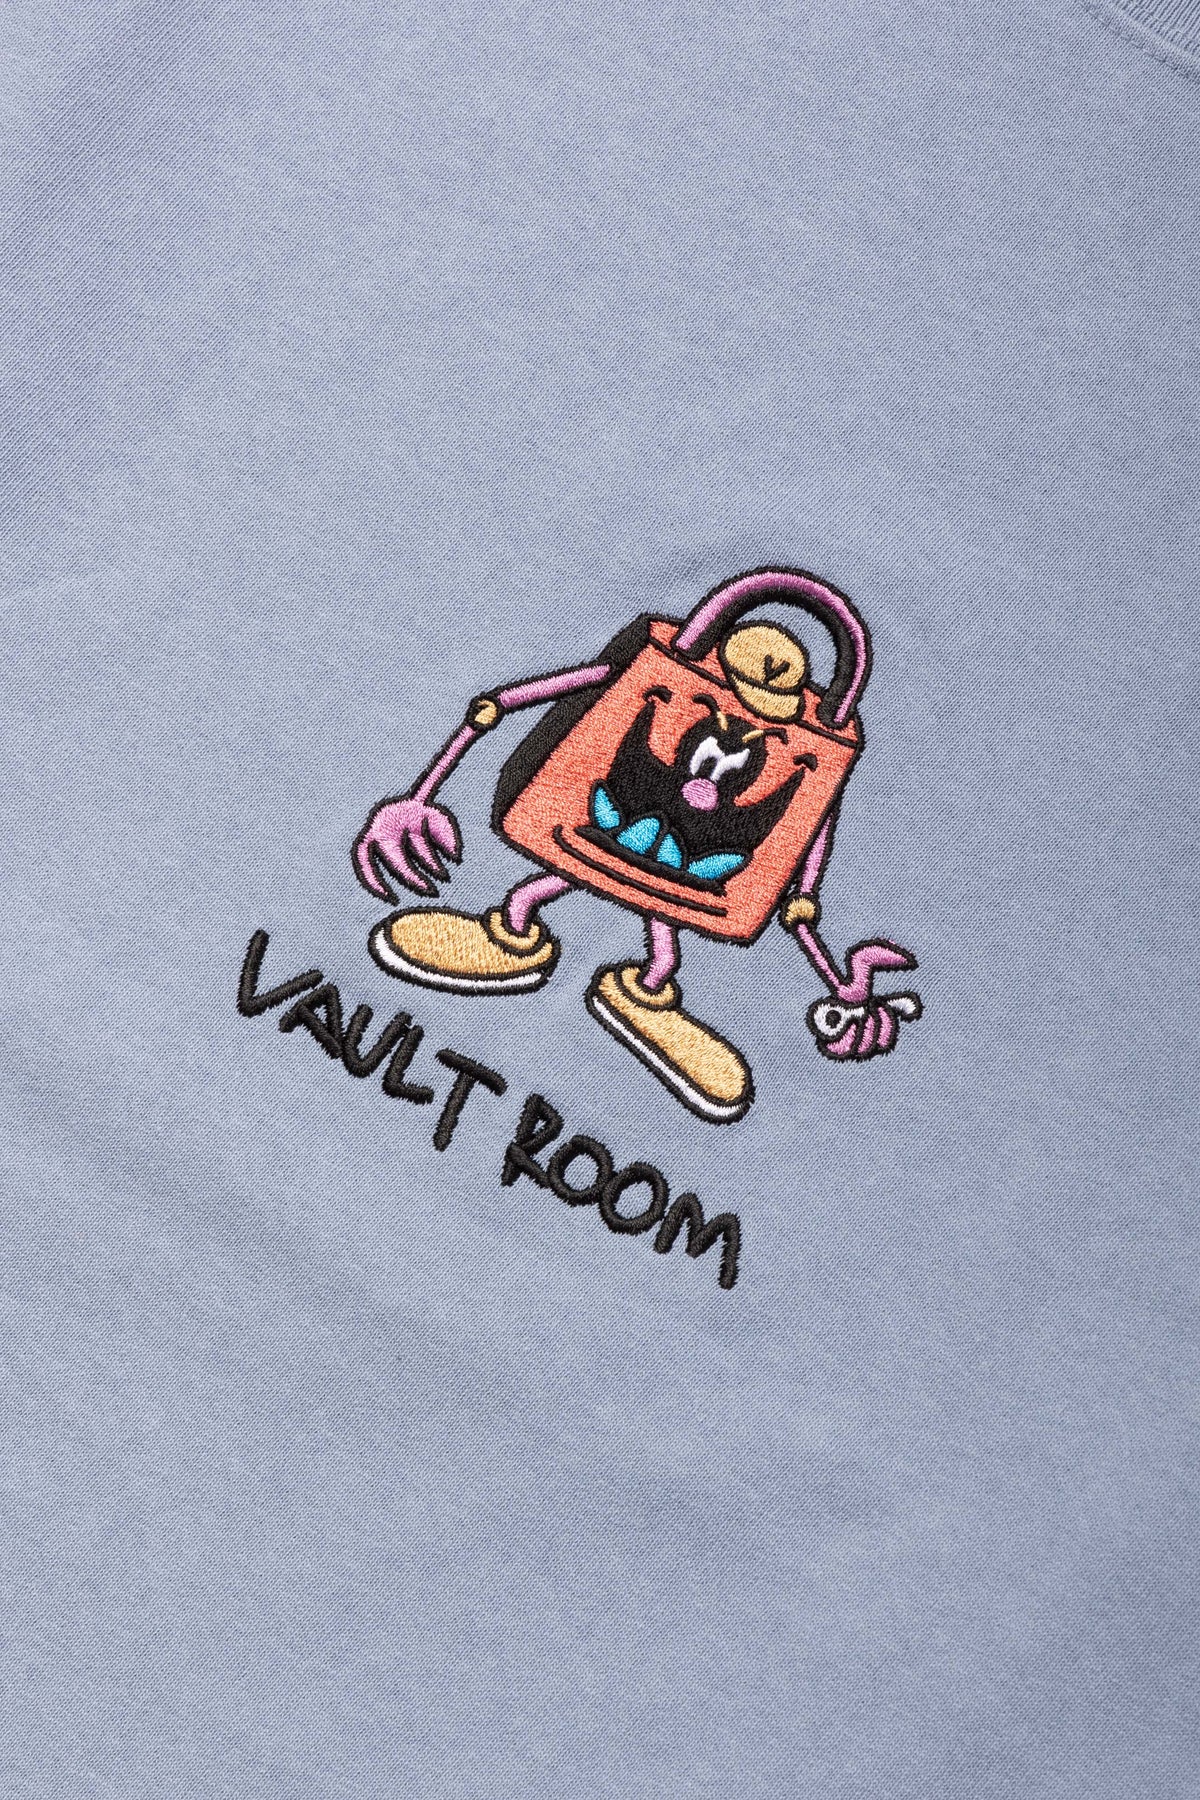 vaultroom devil tシャツ